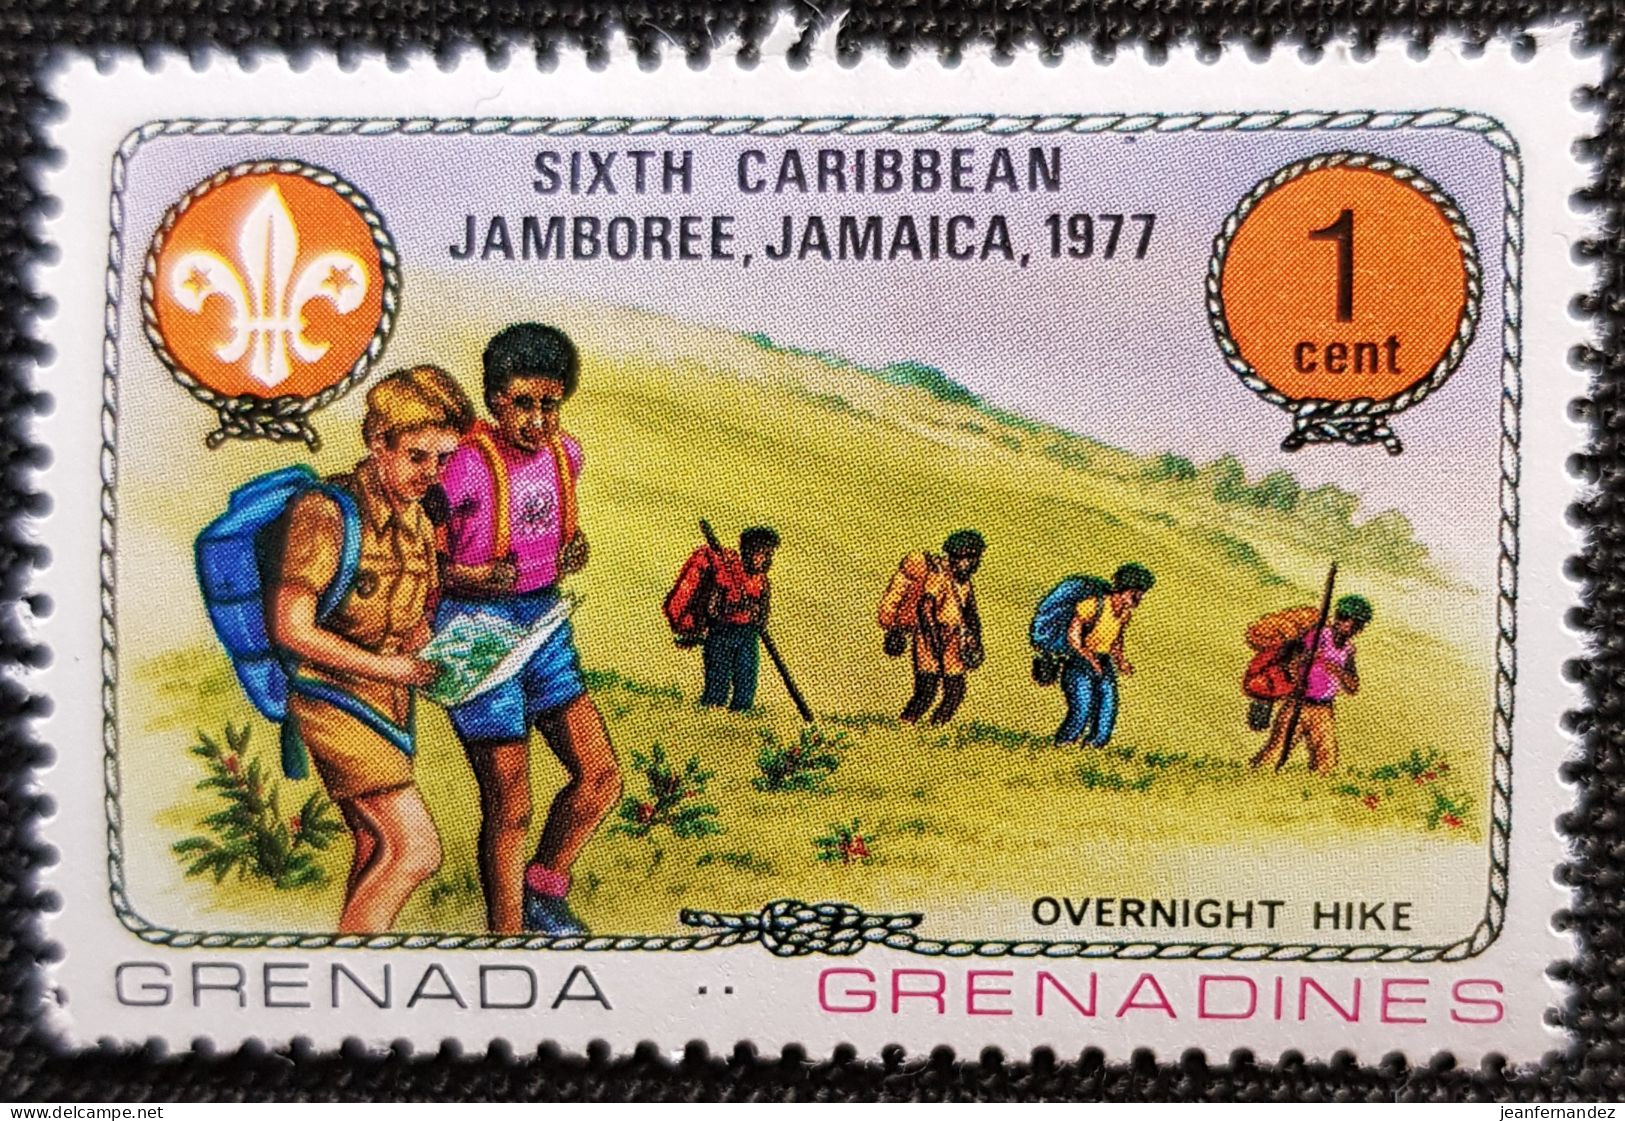 Grenadines 1977 Caribbean Scout Jamboree, Jamaica    Stampworld N° 246 - St.Vincent & Grenadines